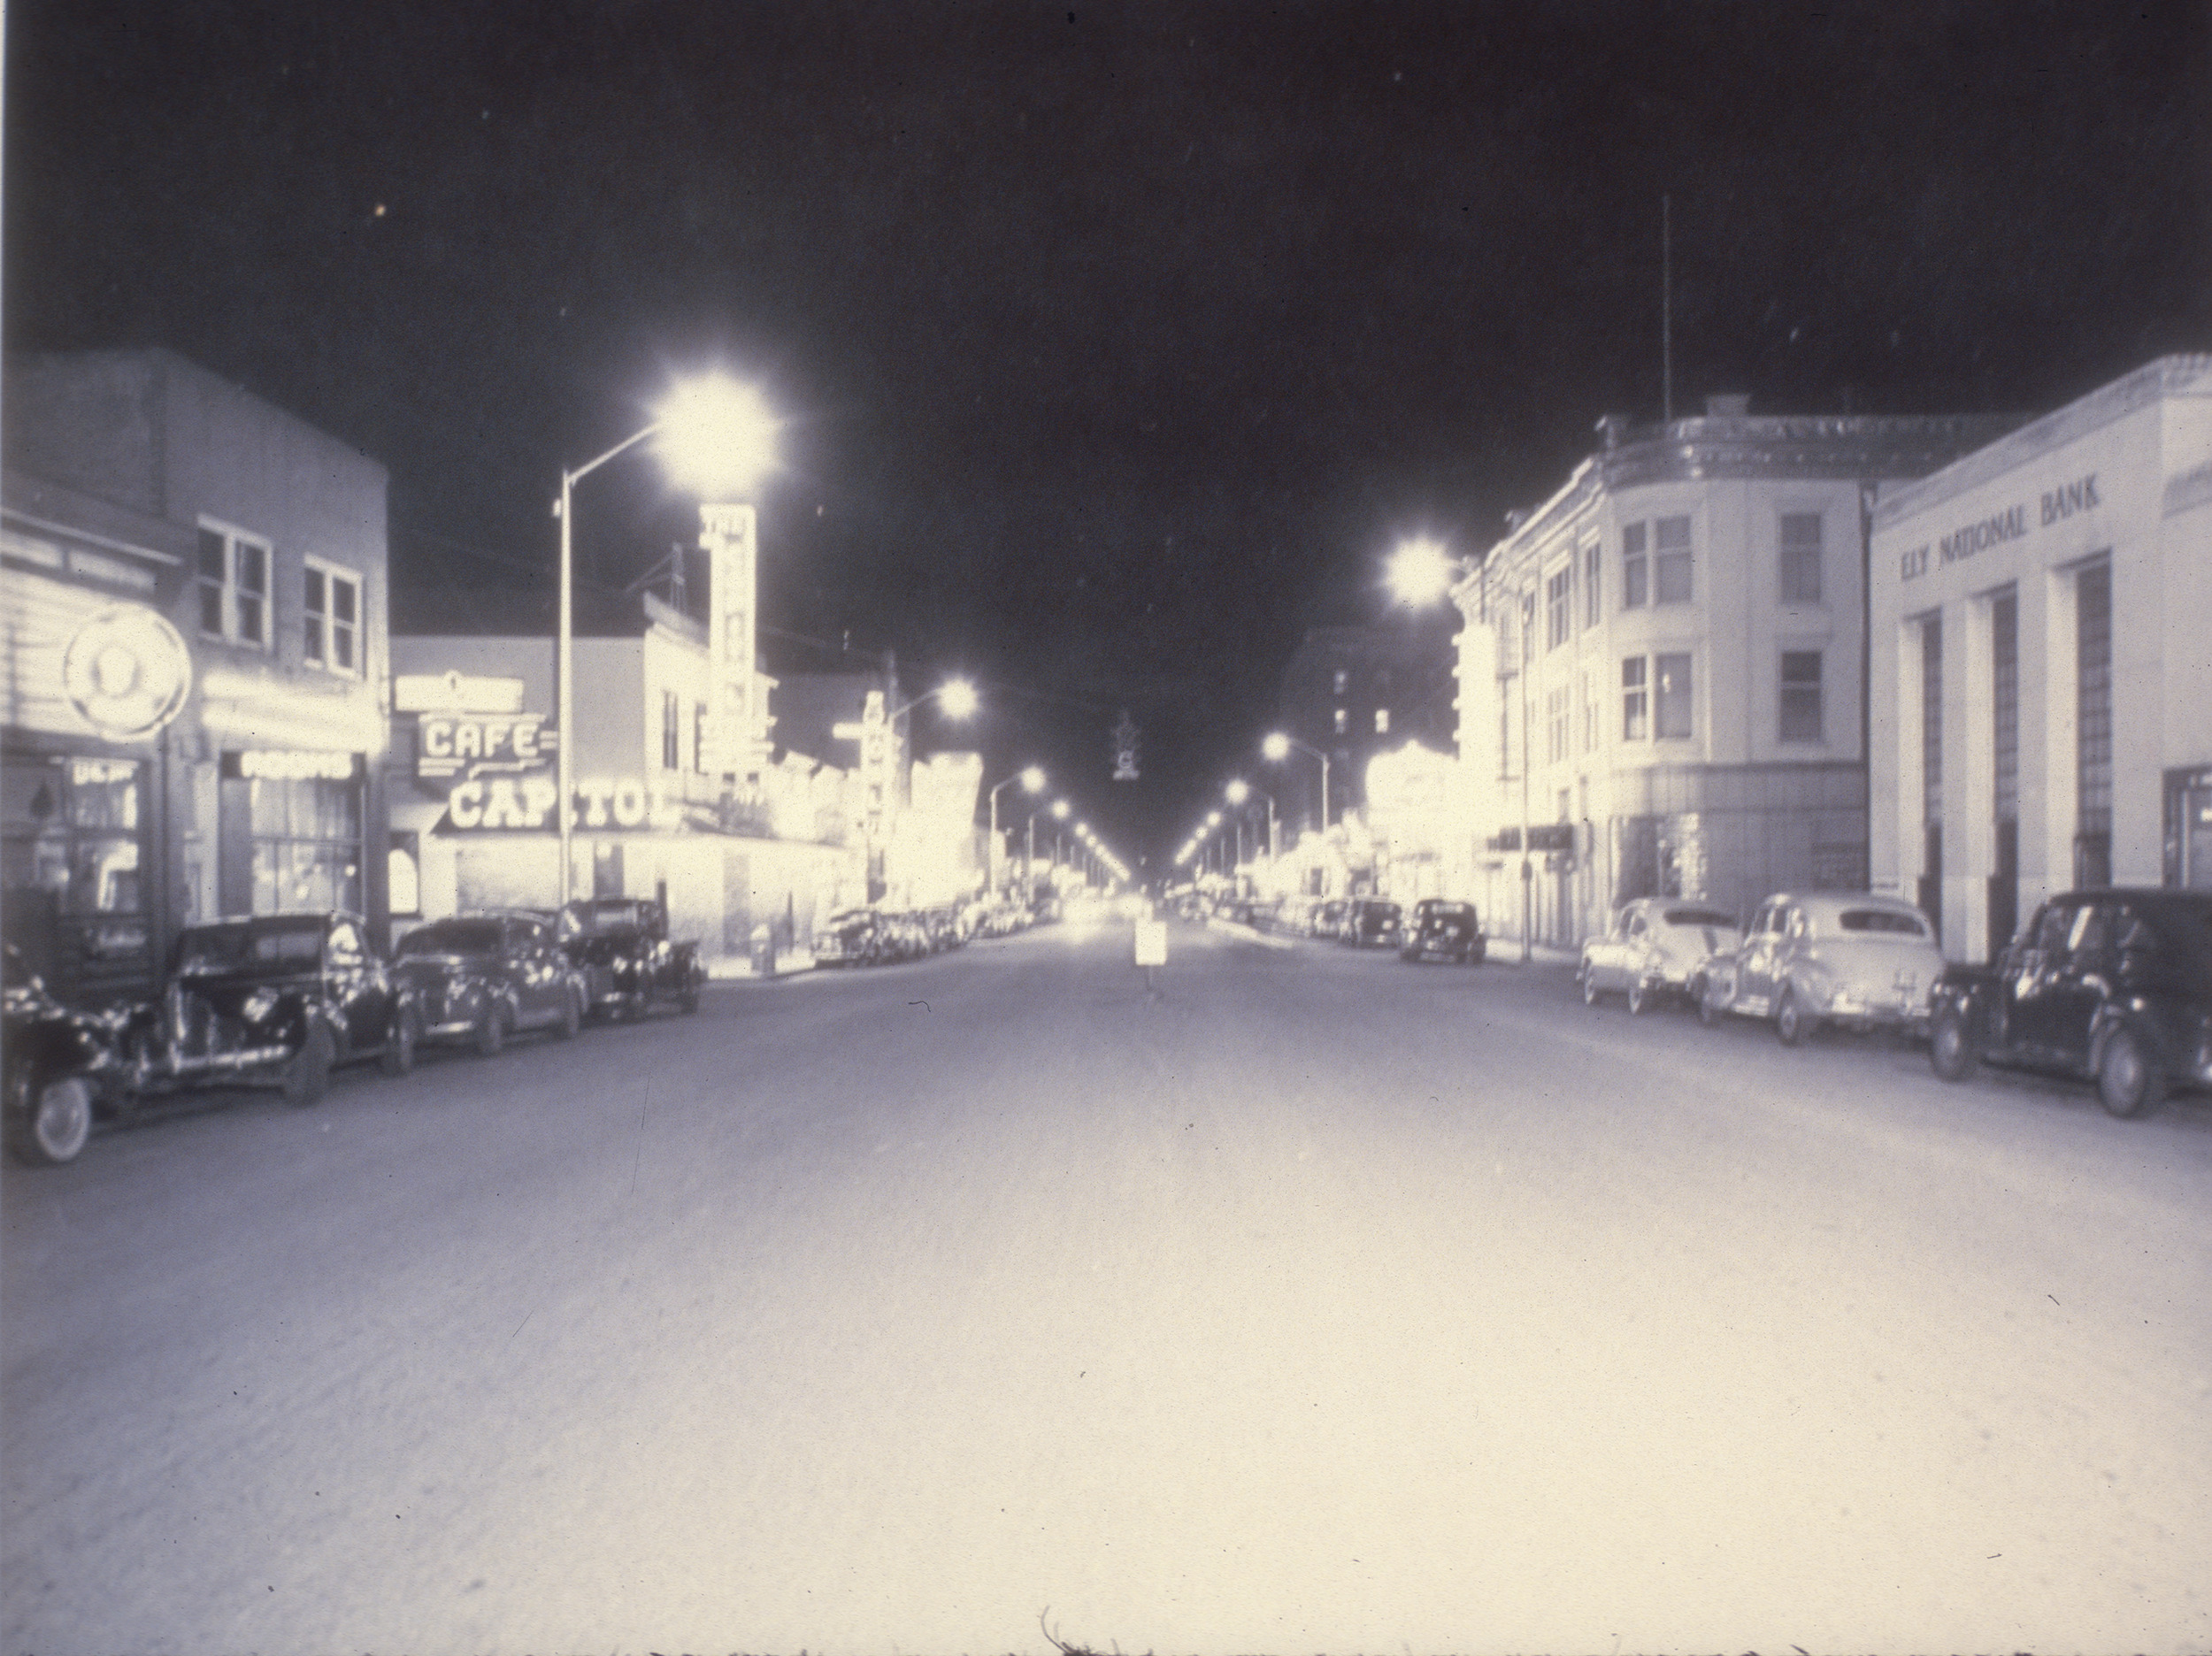 Slide of Main Street, Ely, Nevada, circa 1930s